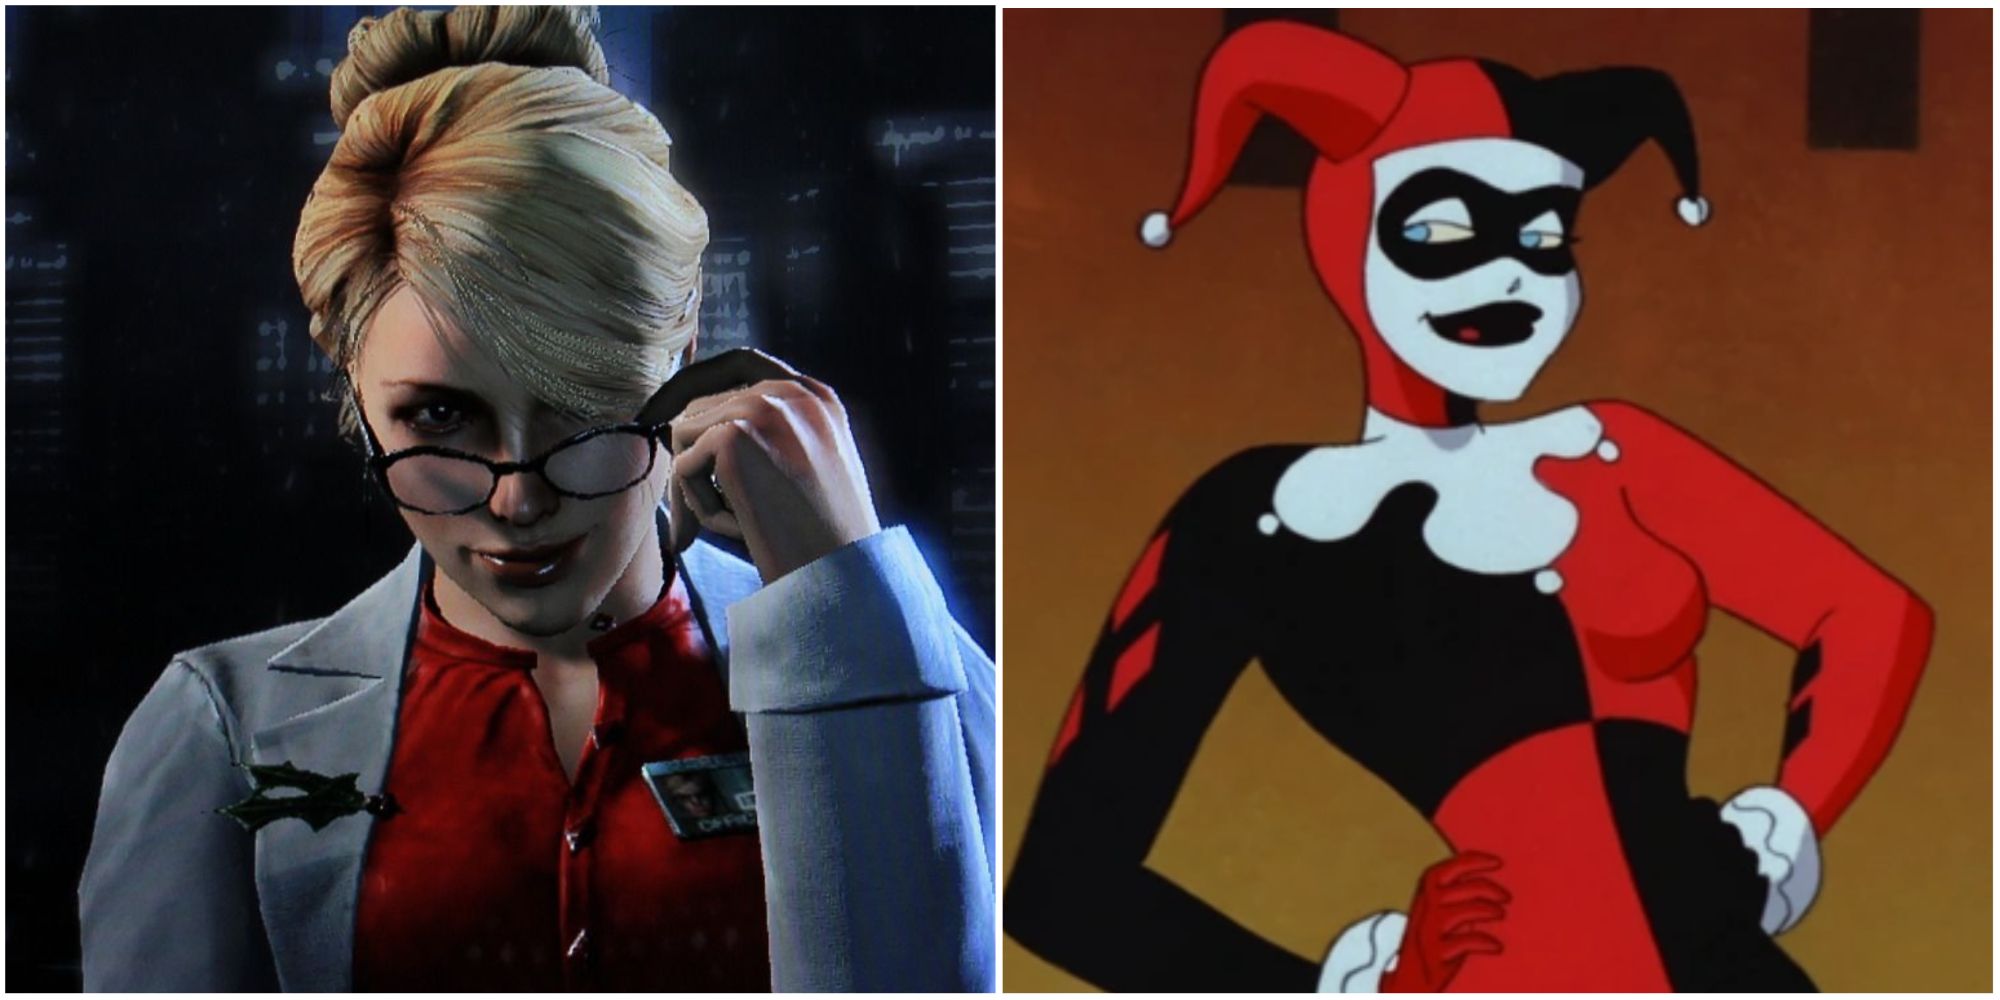 Harley Quinn in Batman: Arkham Origins and The Animated Series